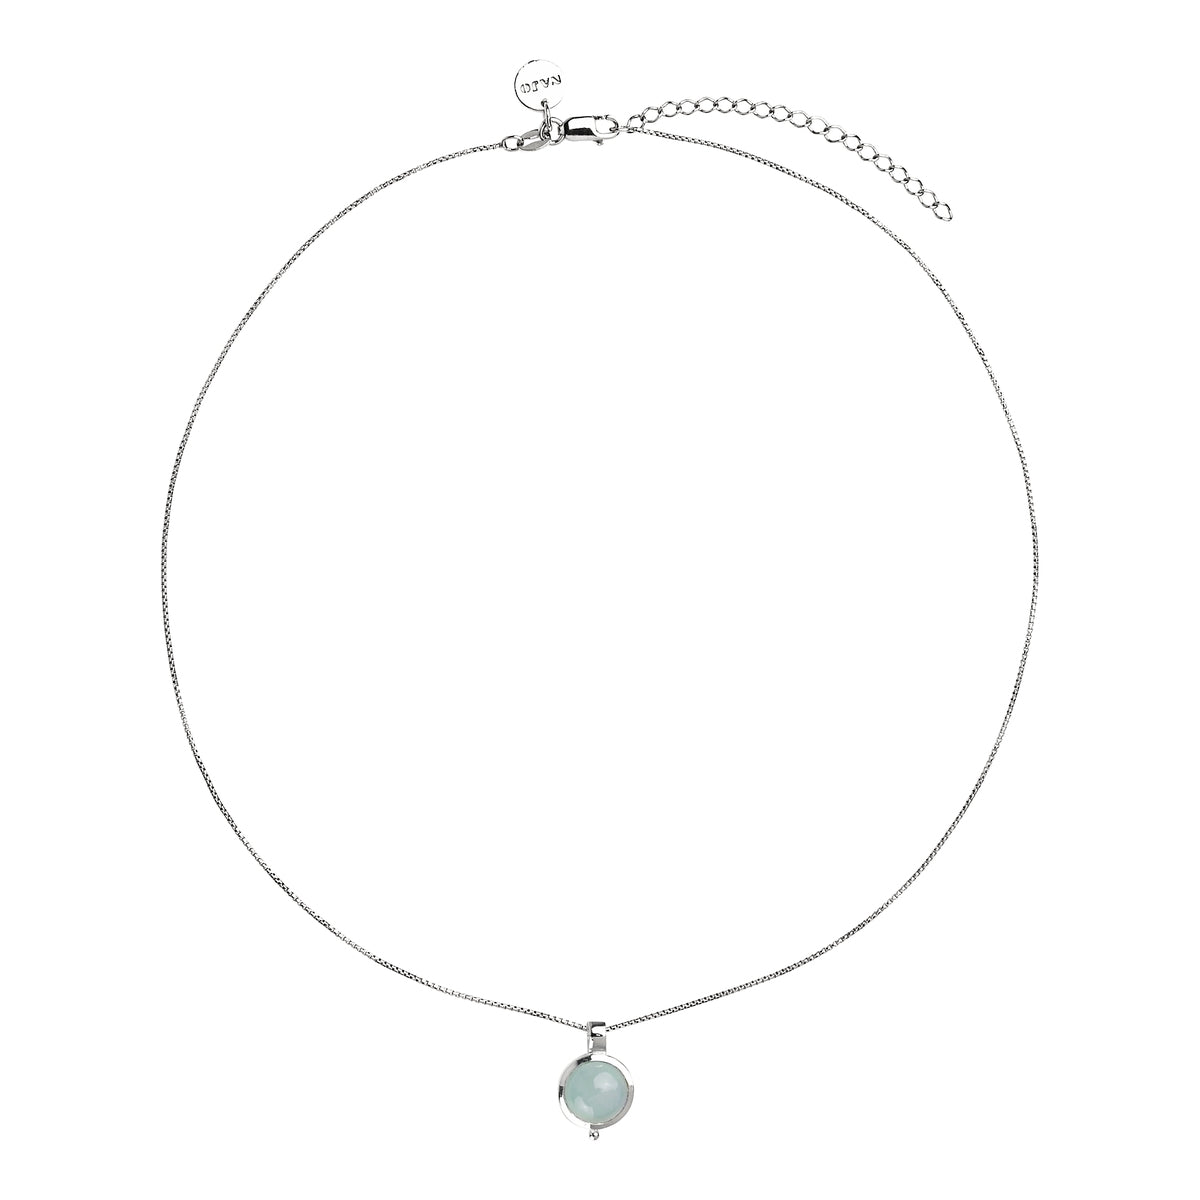 Najo Garland Silver Aqua Chalcedony Necklace